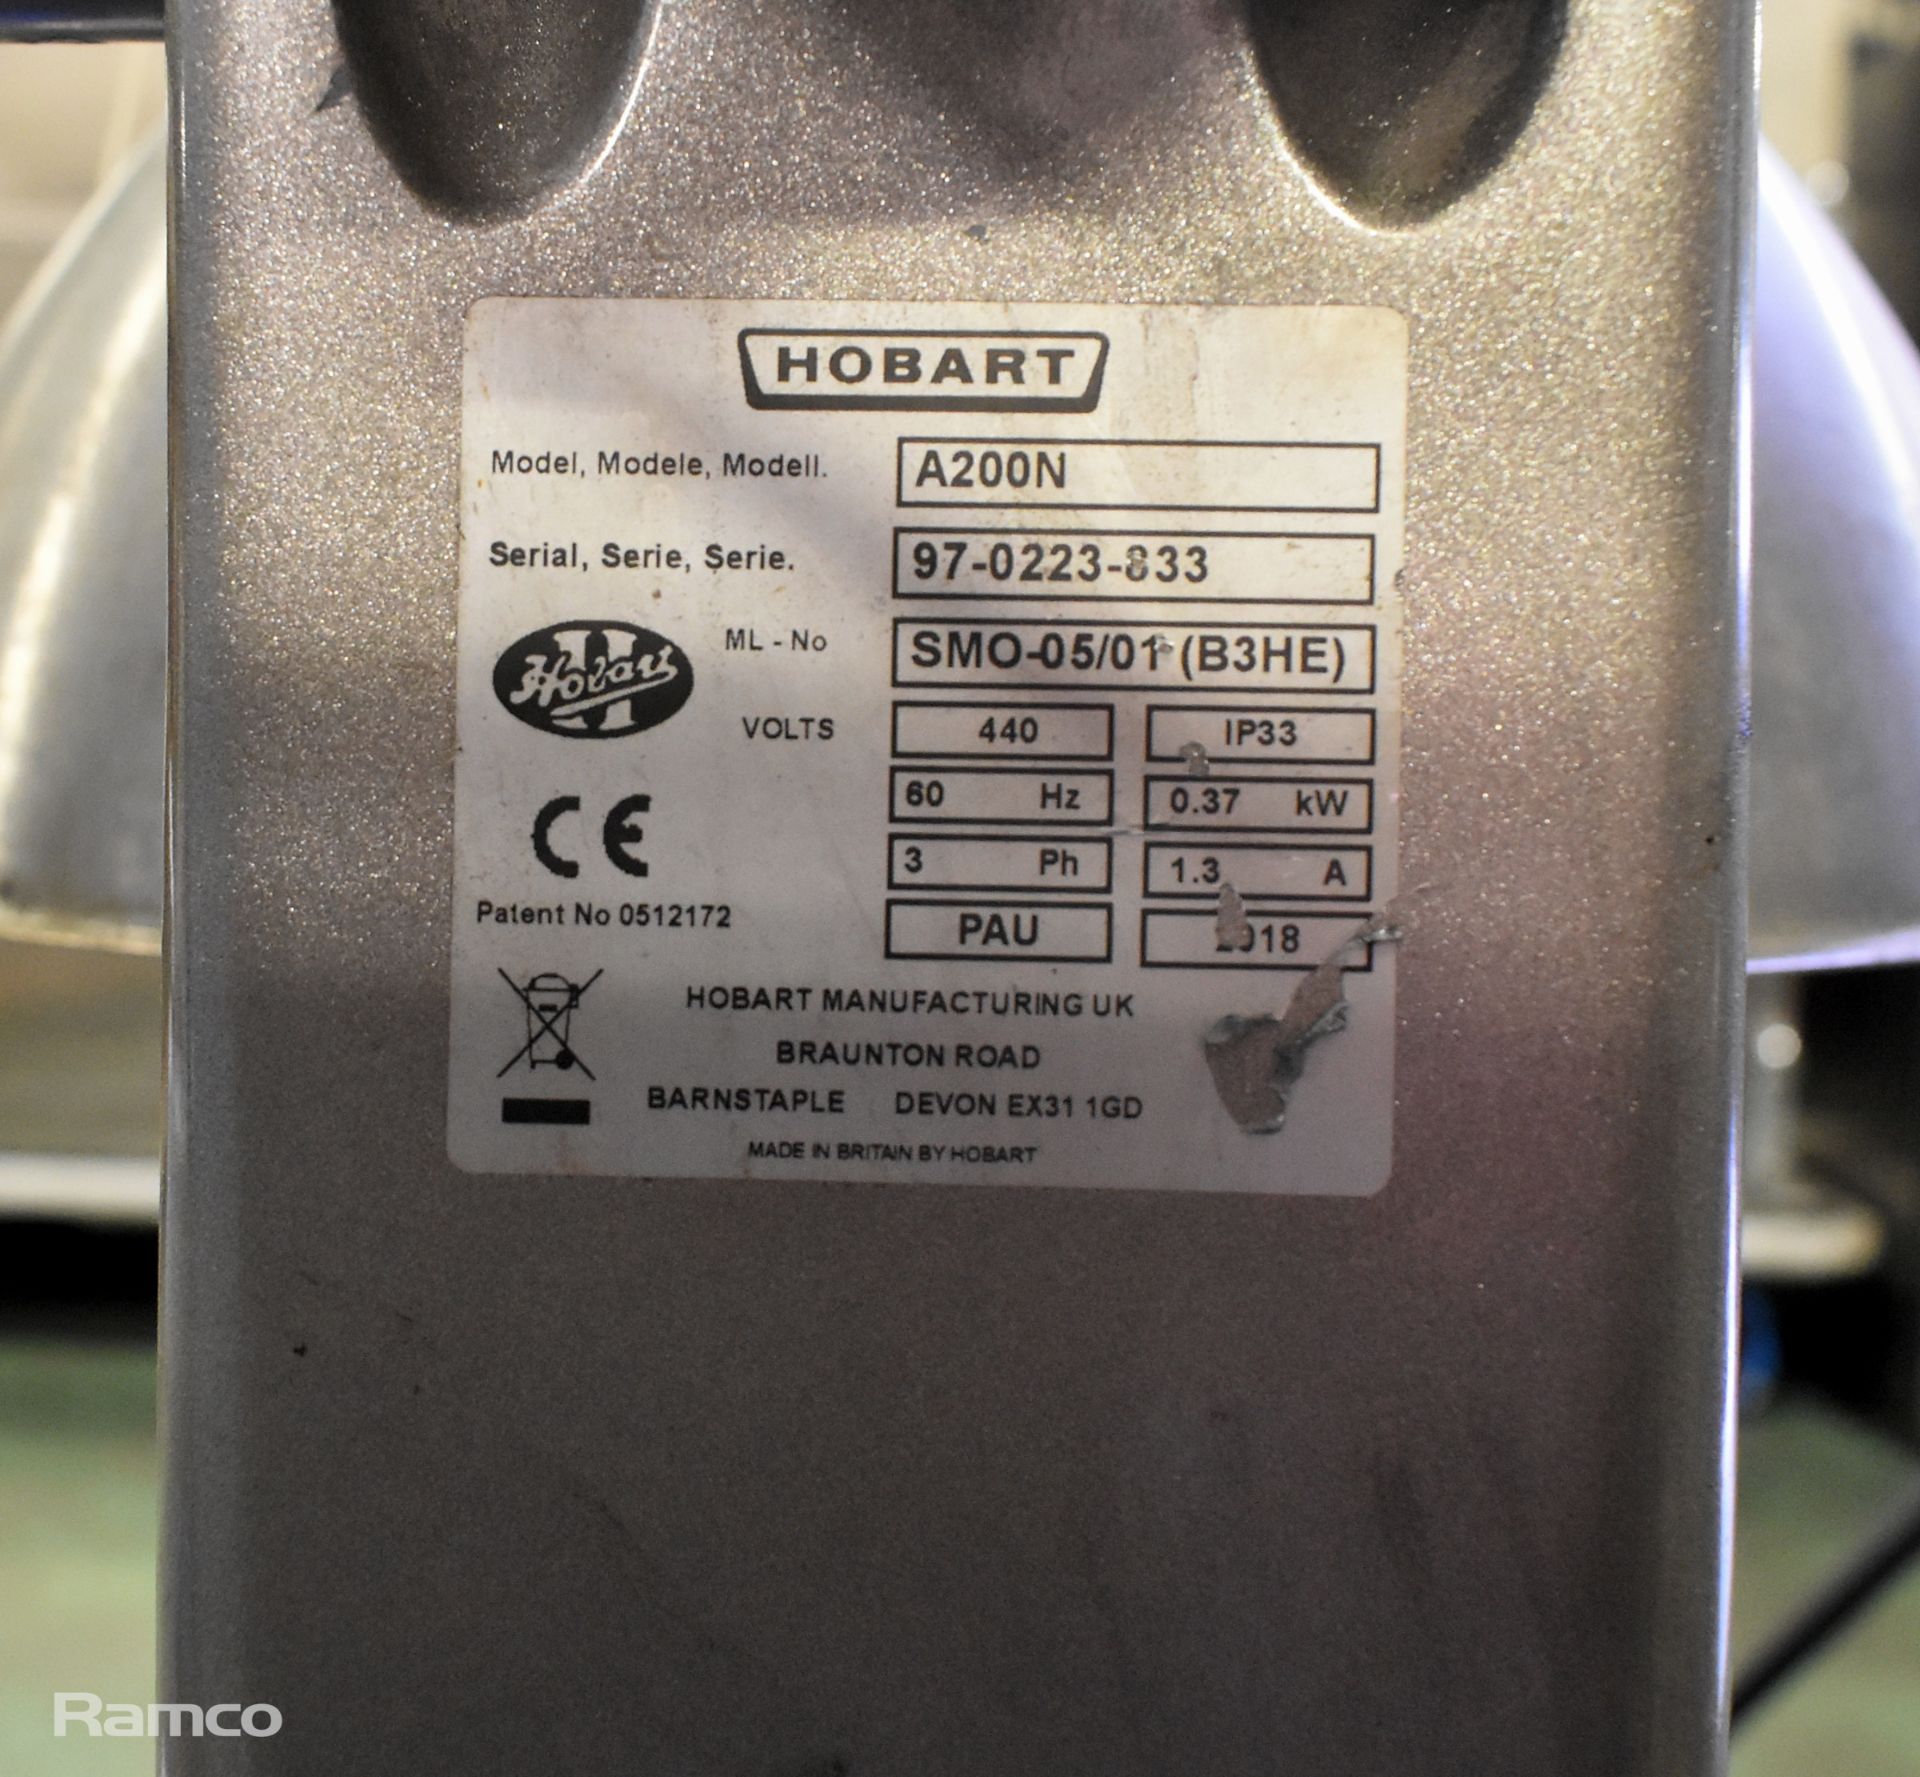 Hobart A200N mixer - NO BOWL OR ATTACHMENTS - 440V - 60Hz - W 450 x D 600 x H 800mm - Image 7 of 7